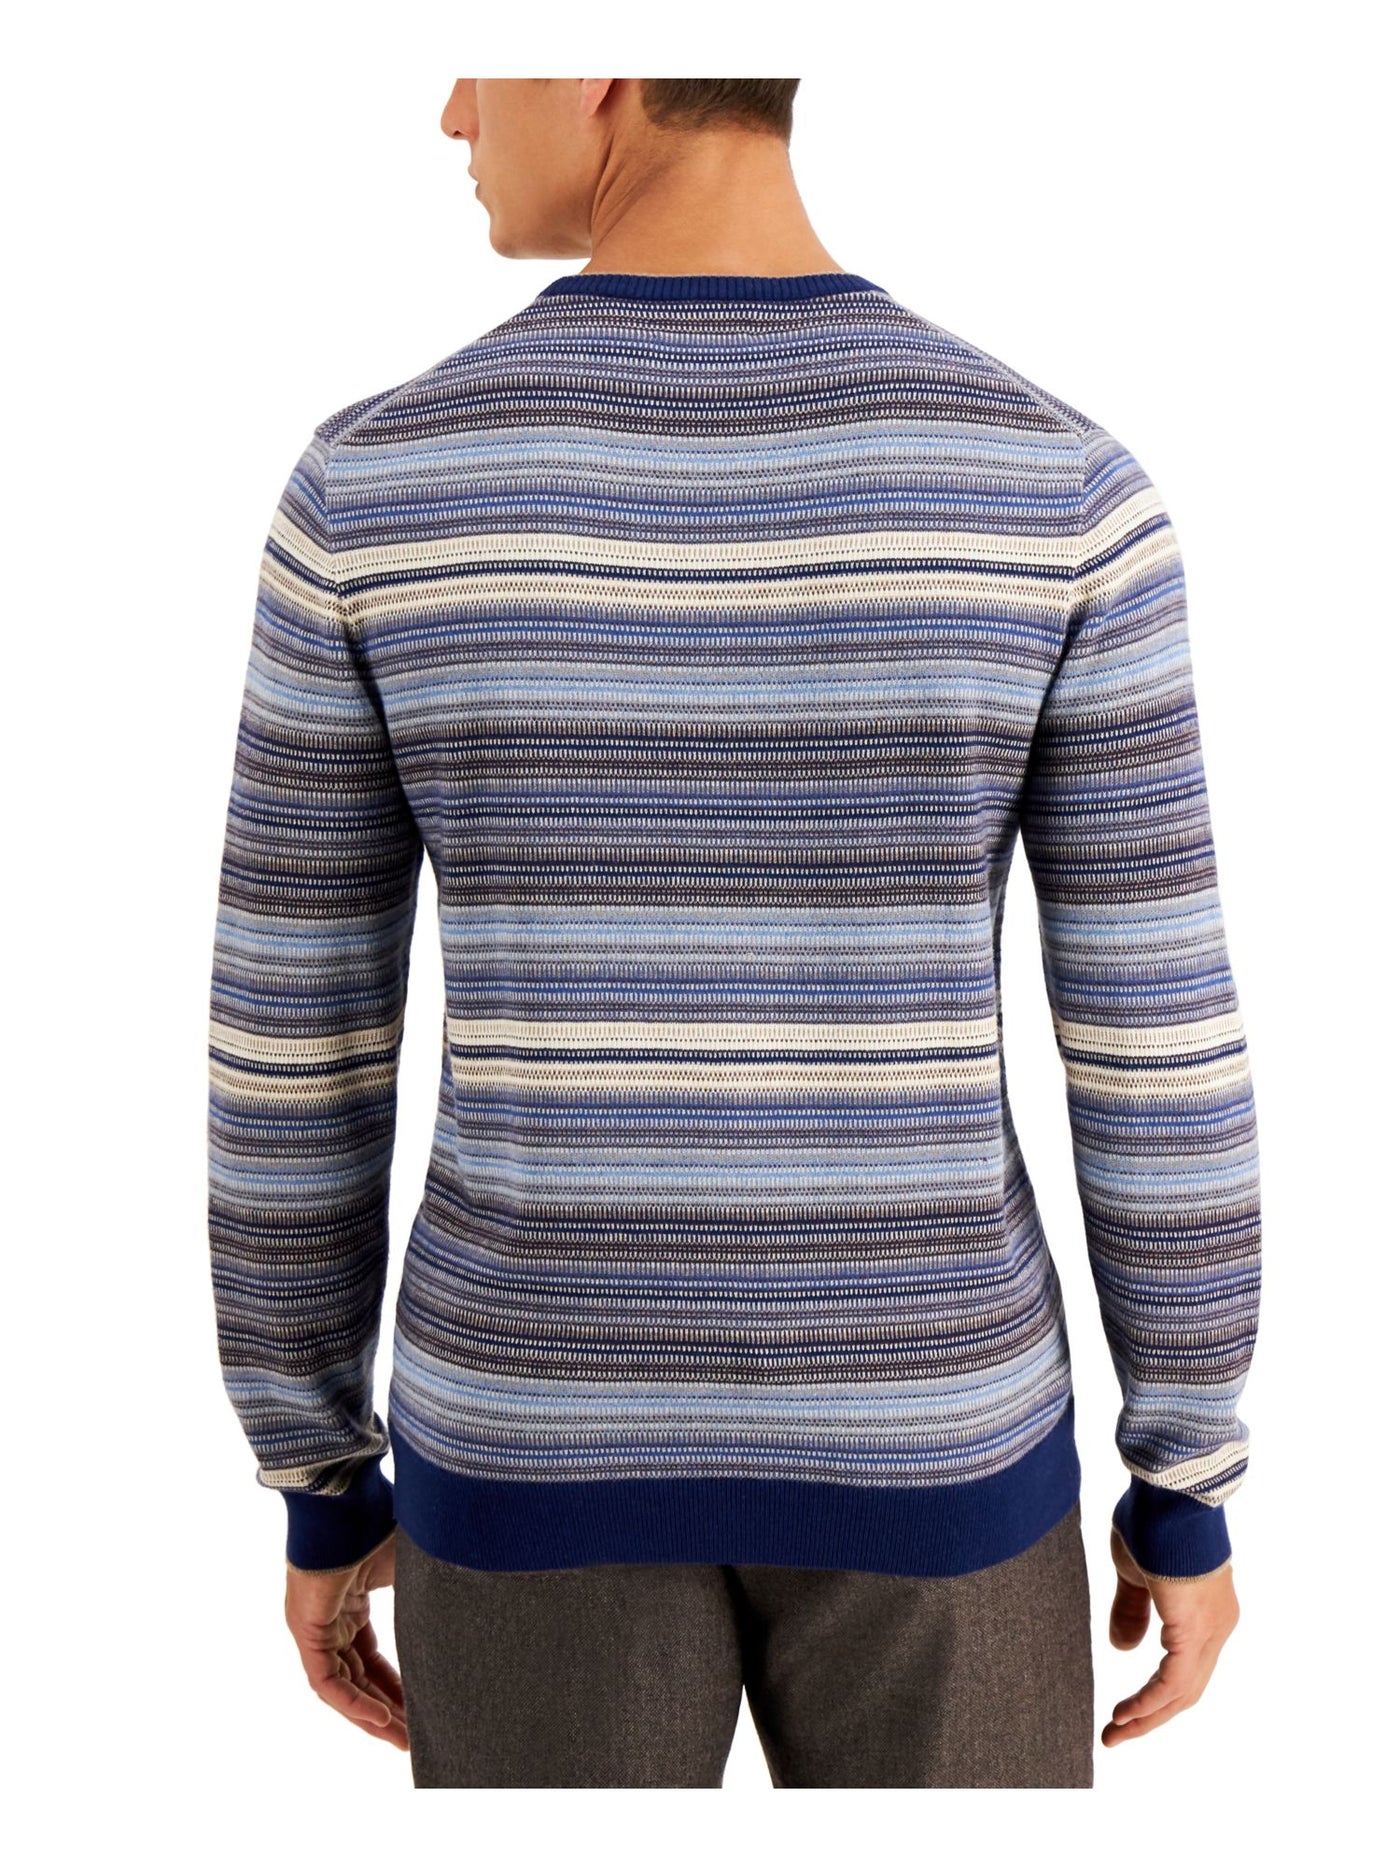 TASSO ELBA Mens Blue Striped Pullover Sweater S